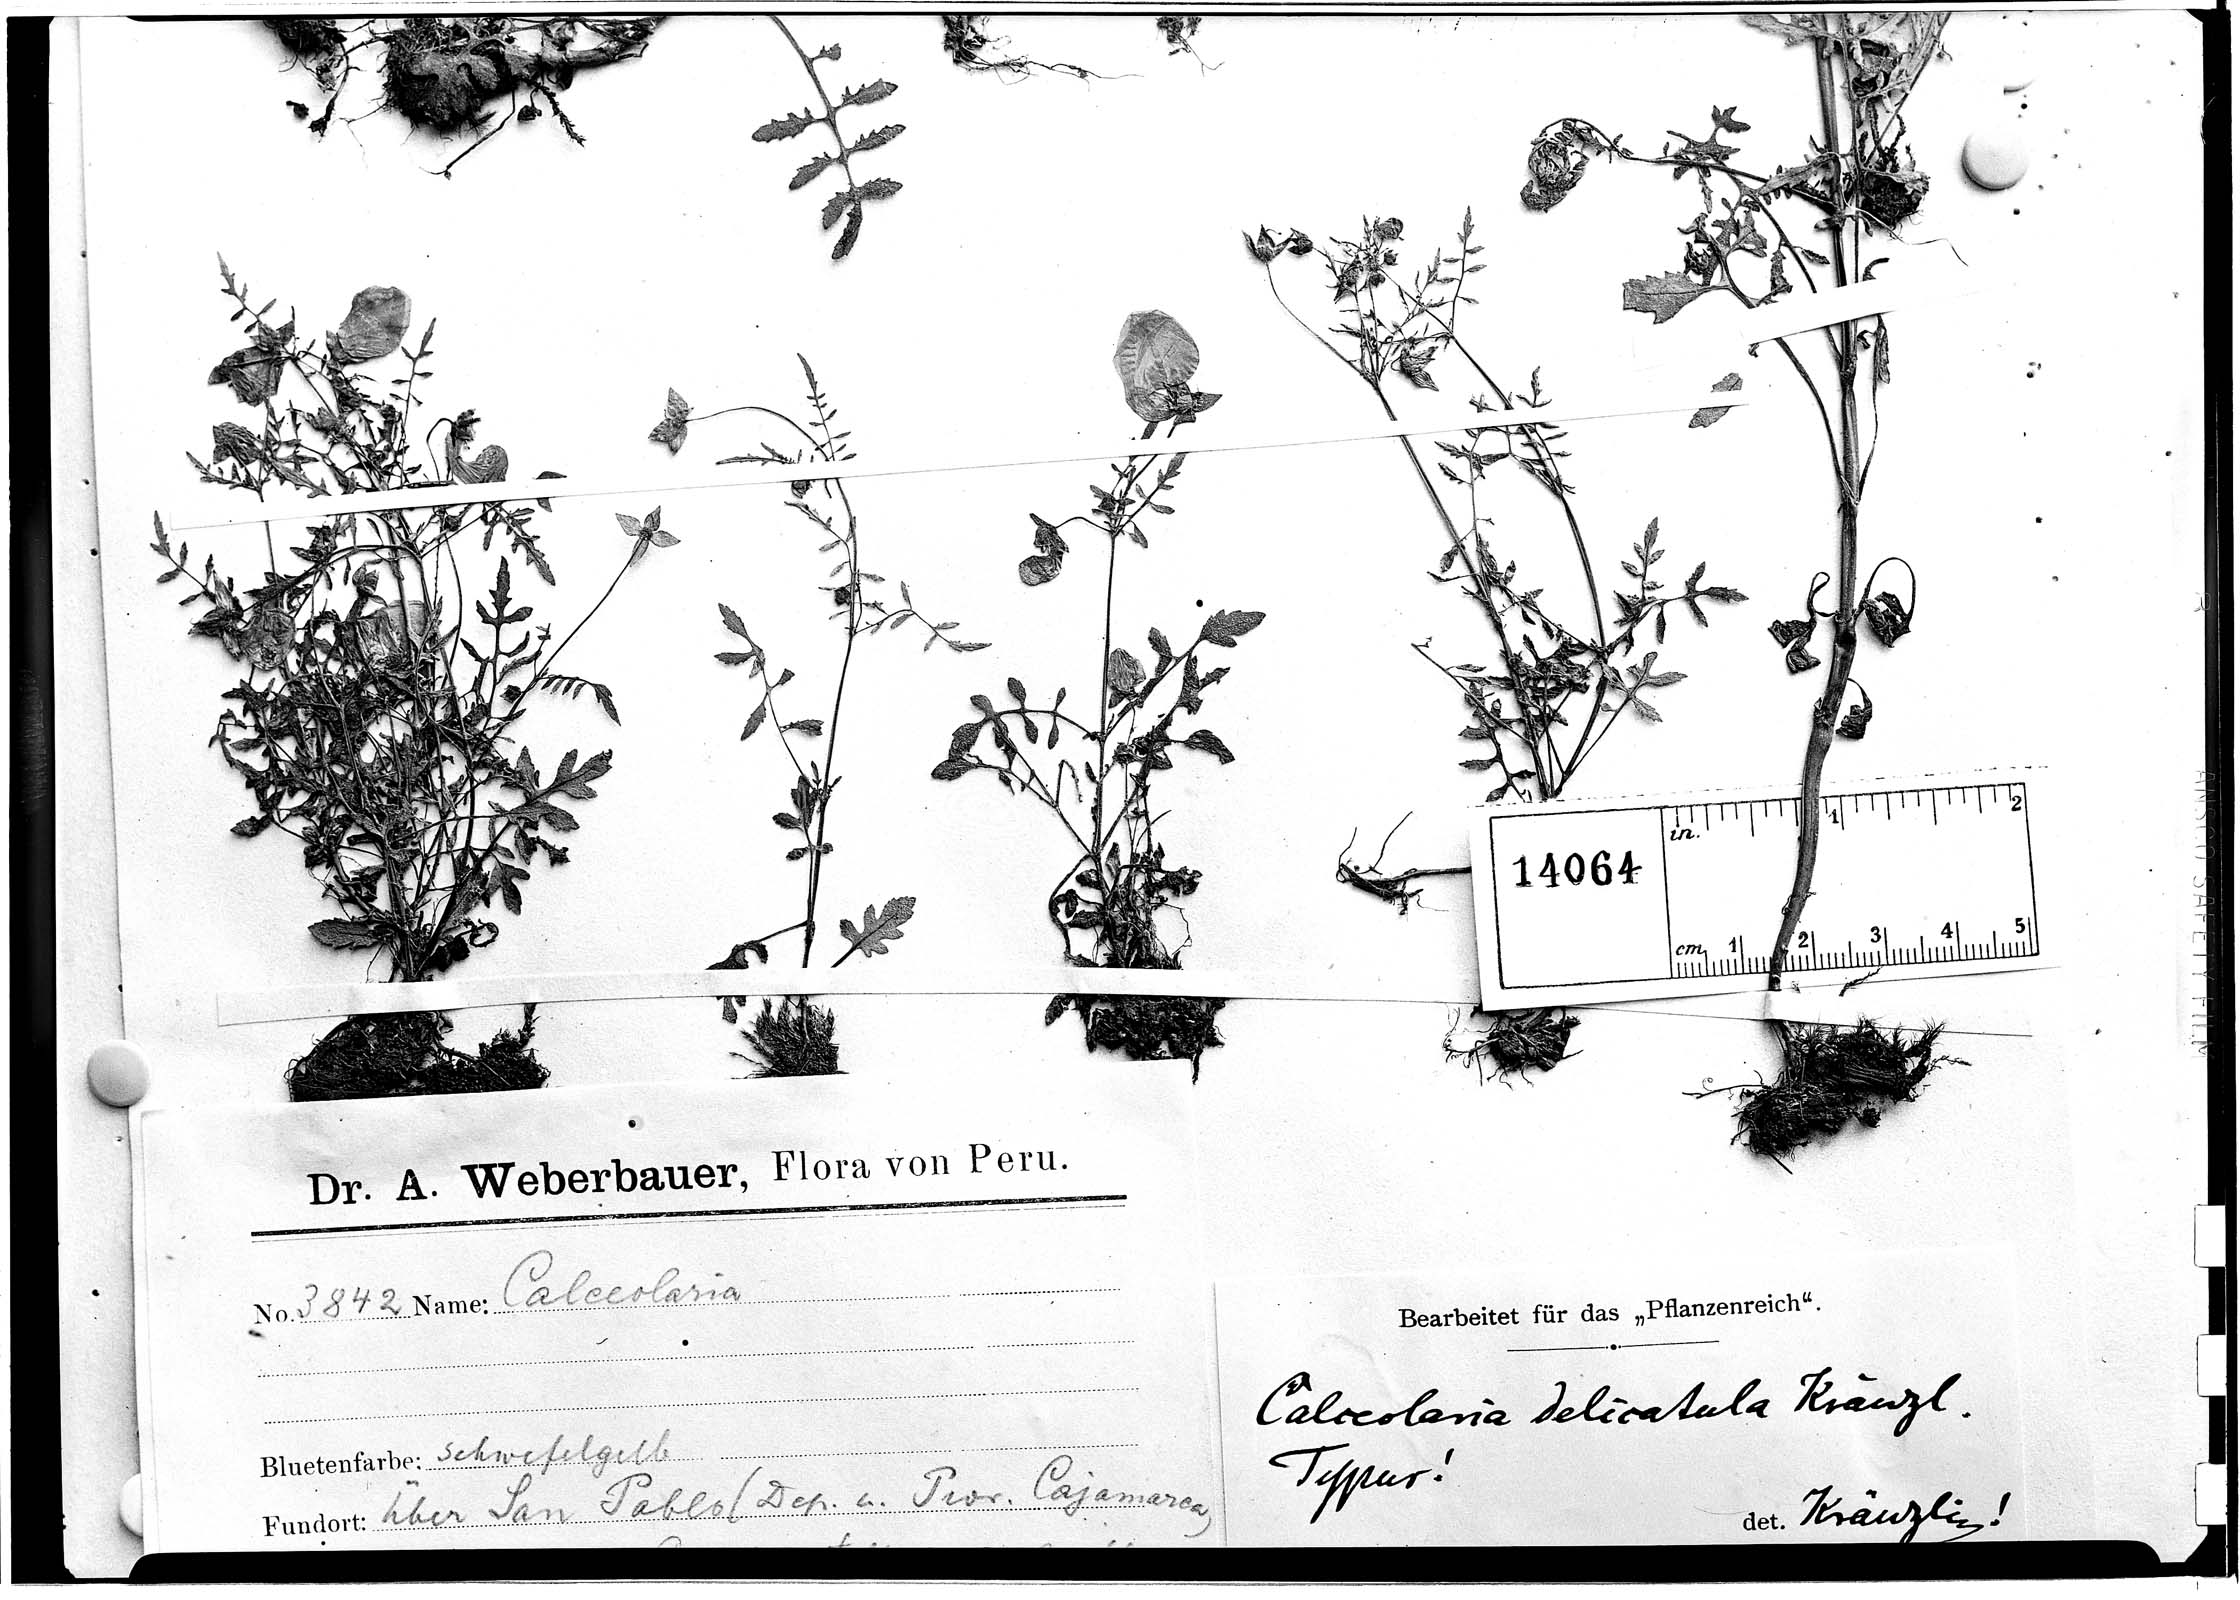 Calceolaria pinnata image